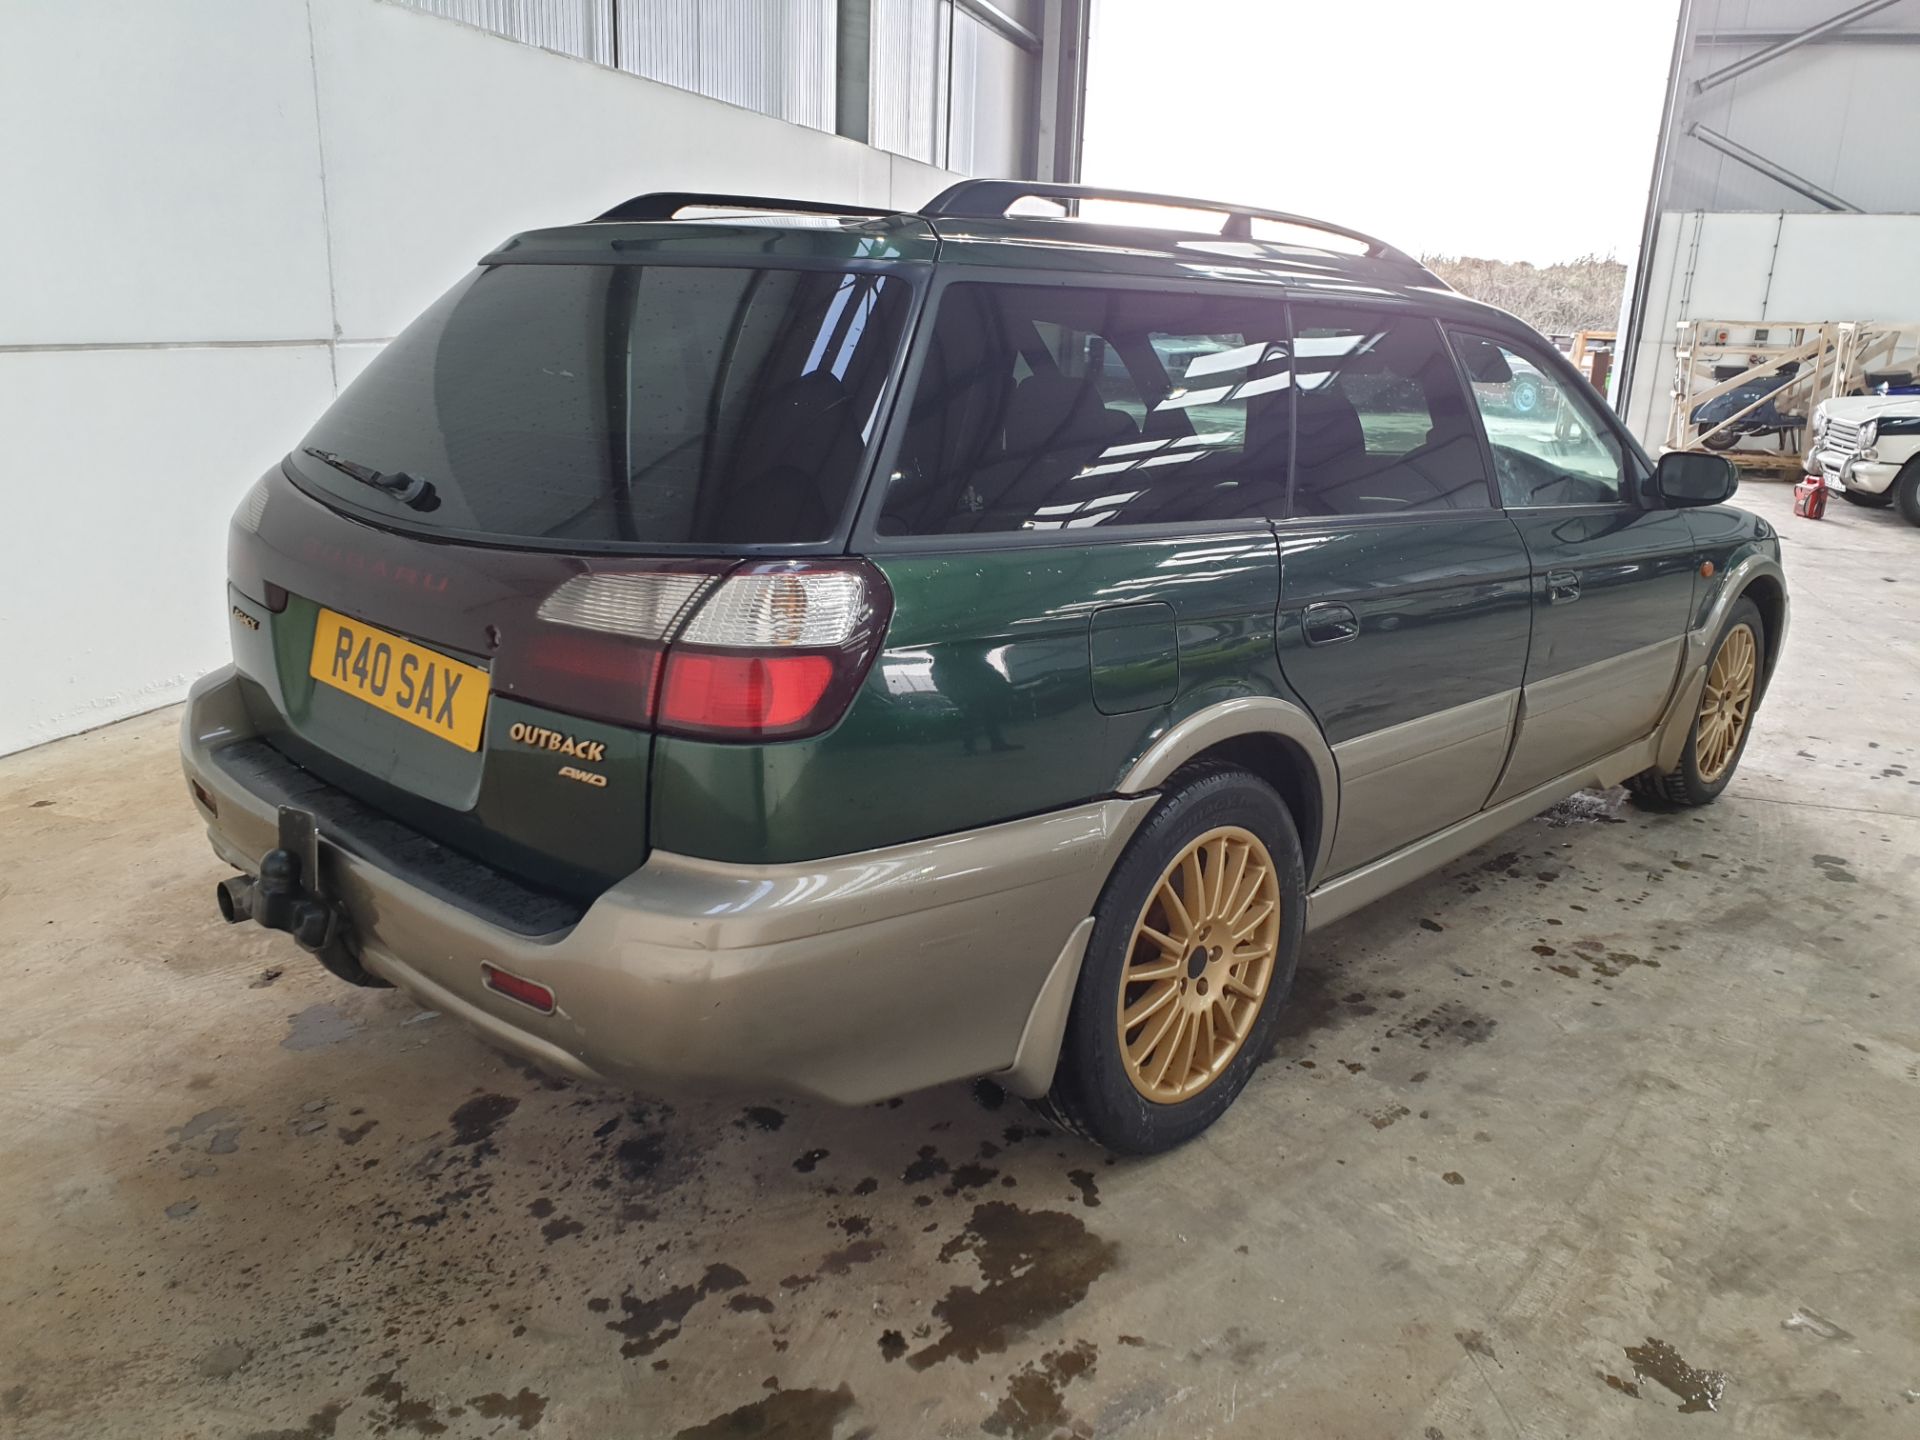 1998 Subaru Legacy estate - Image 3 of 14